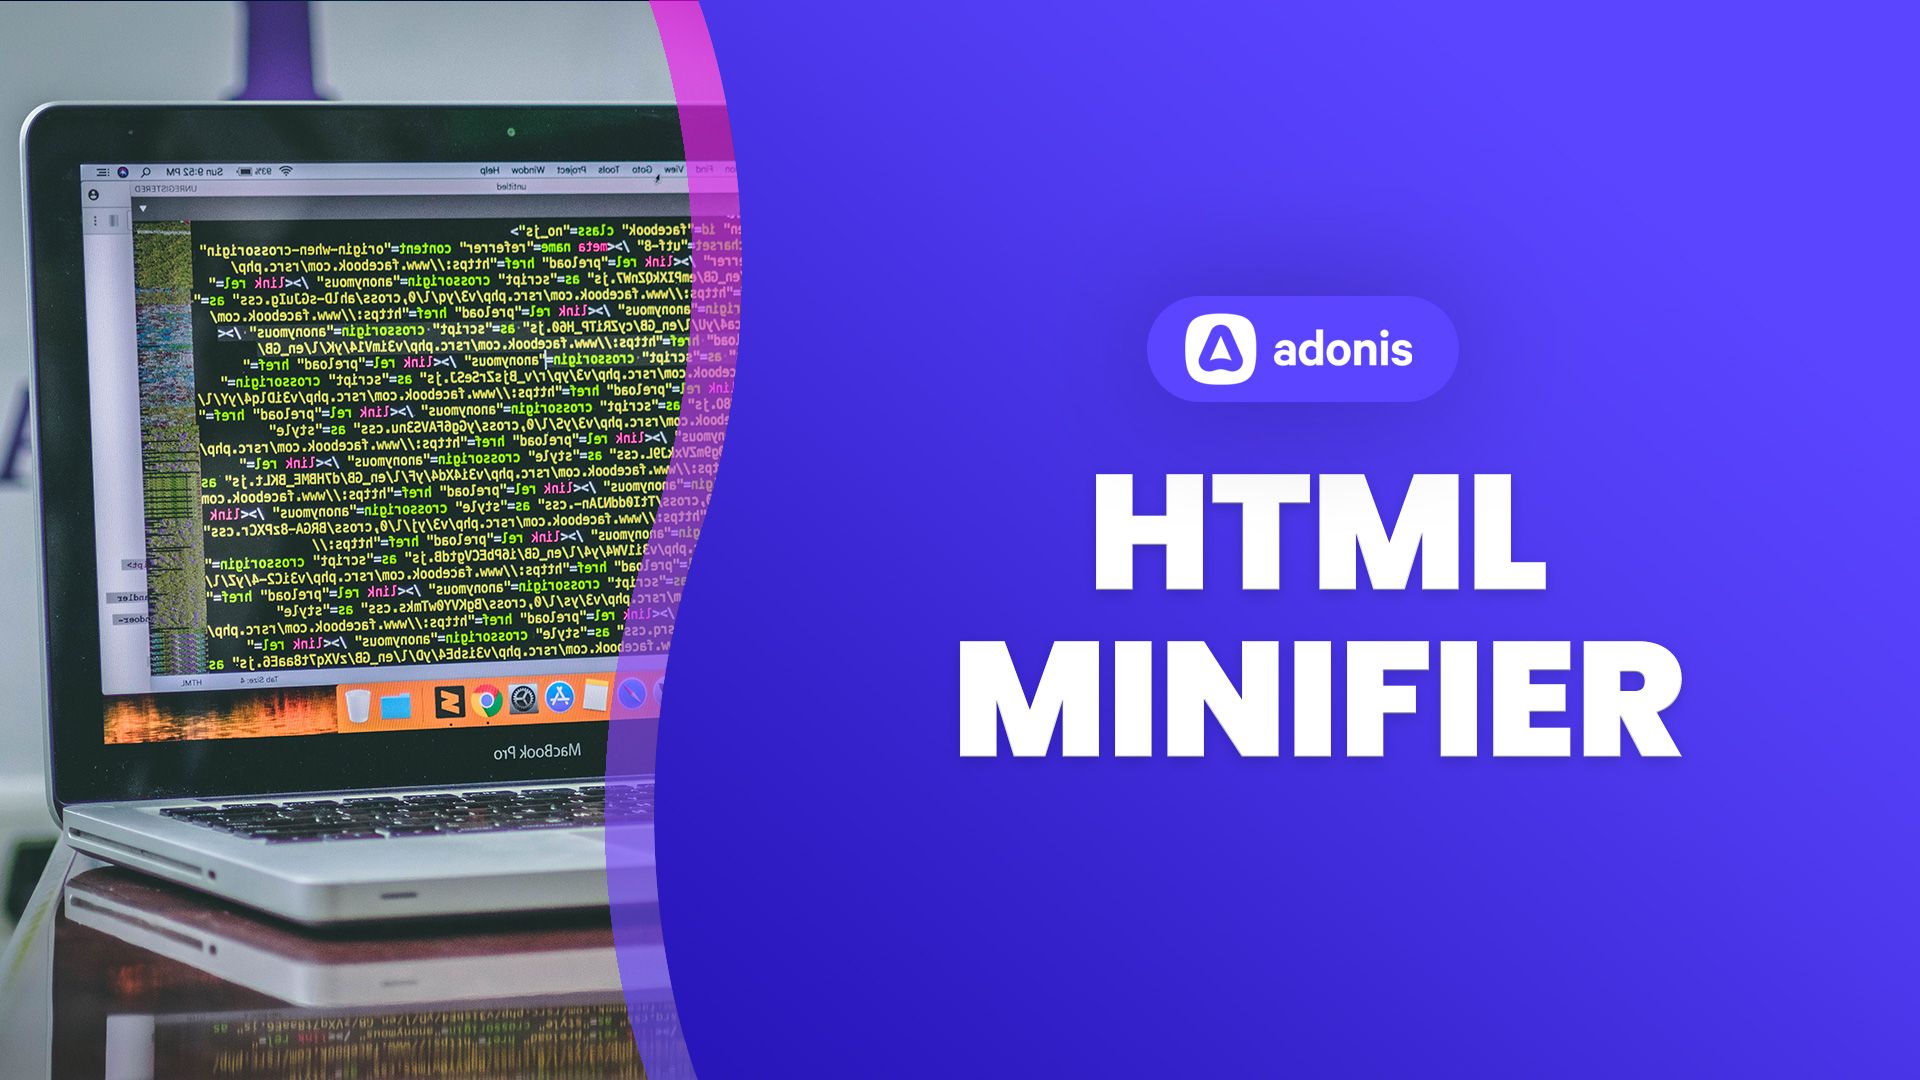 AdonisJS HTML Minifier